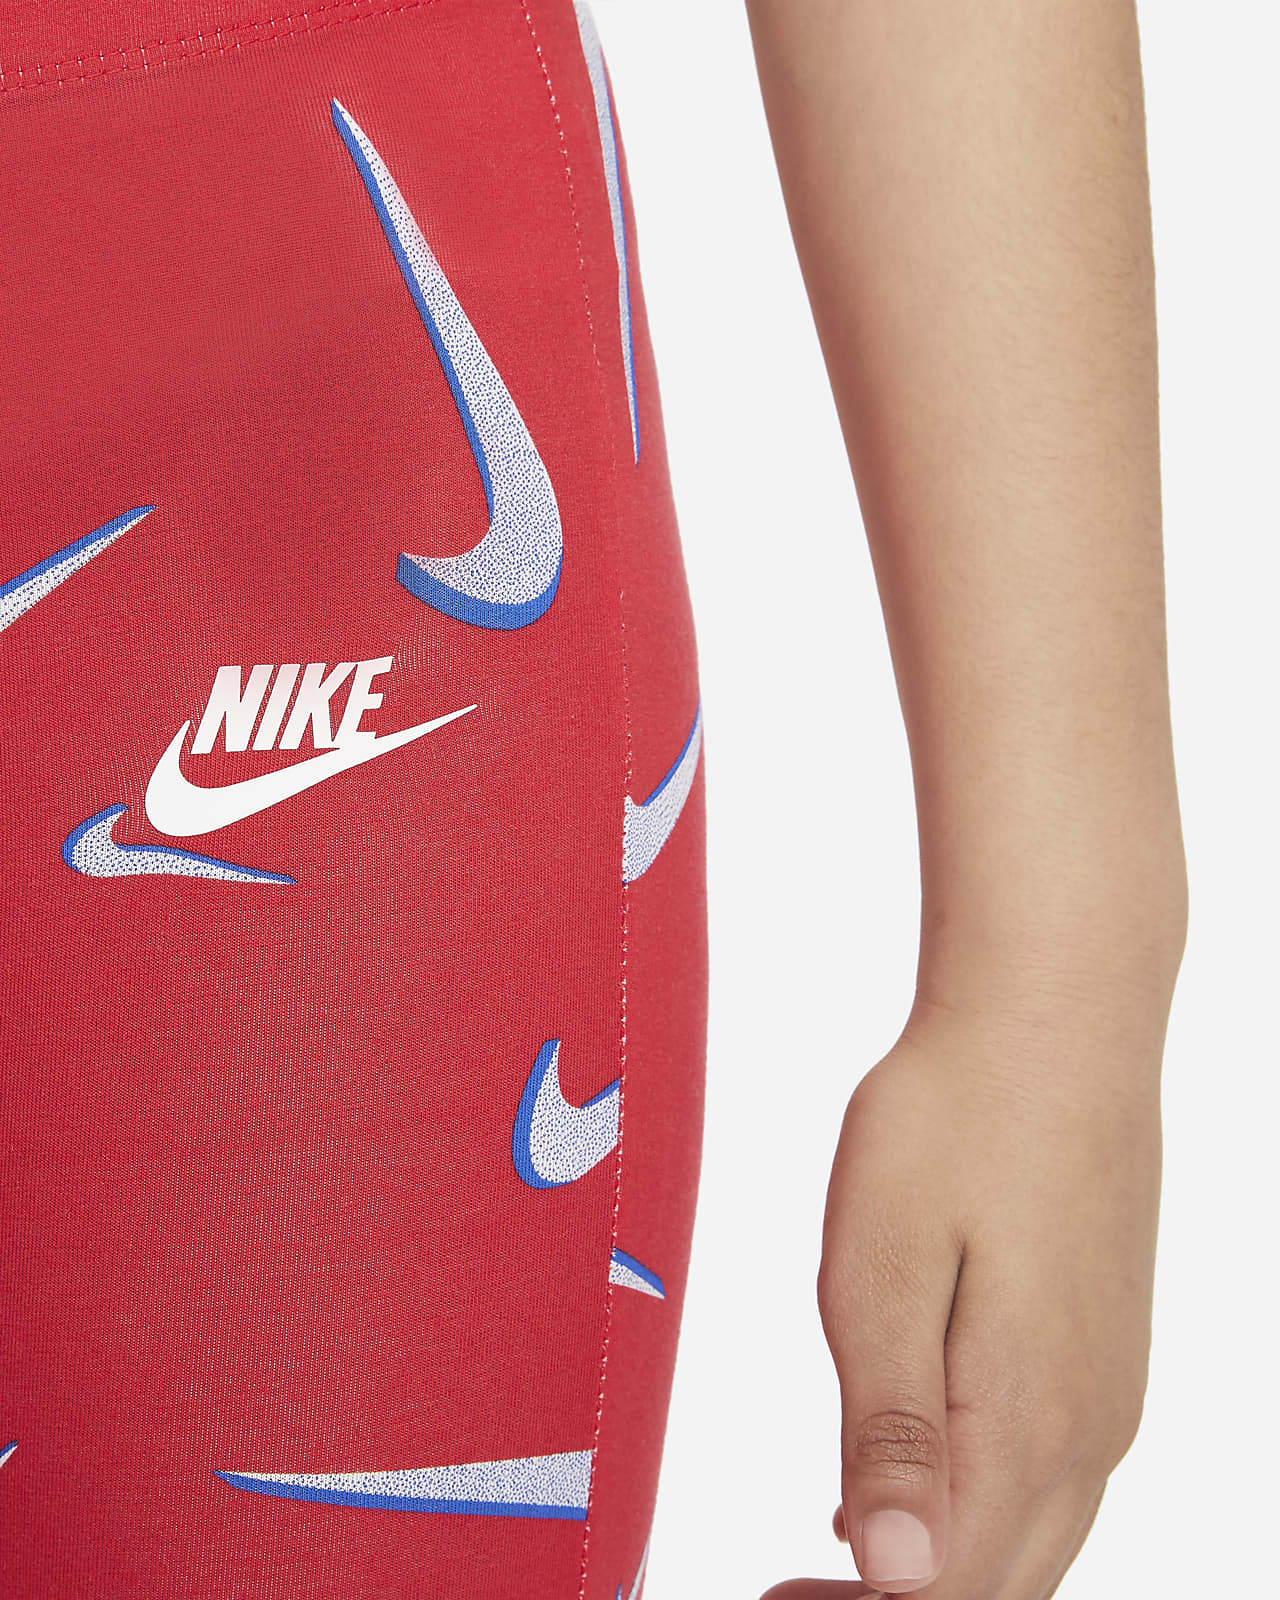 NIKE - leggins ragazza g sportswear favorites all over print leggin